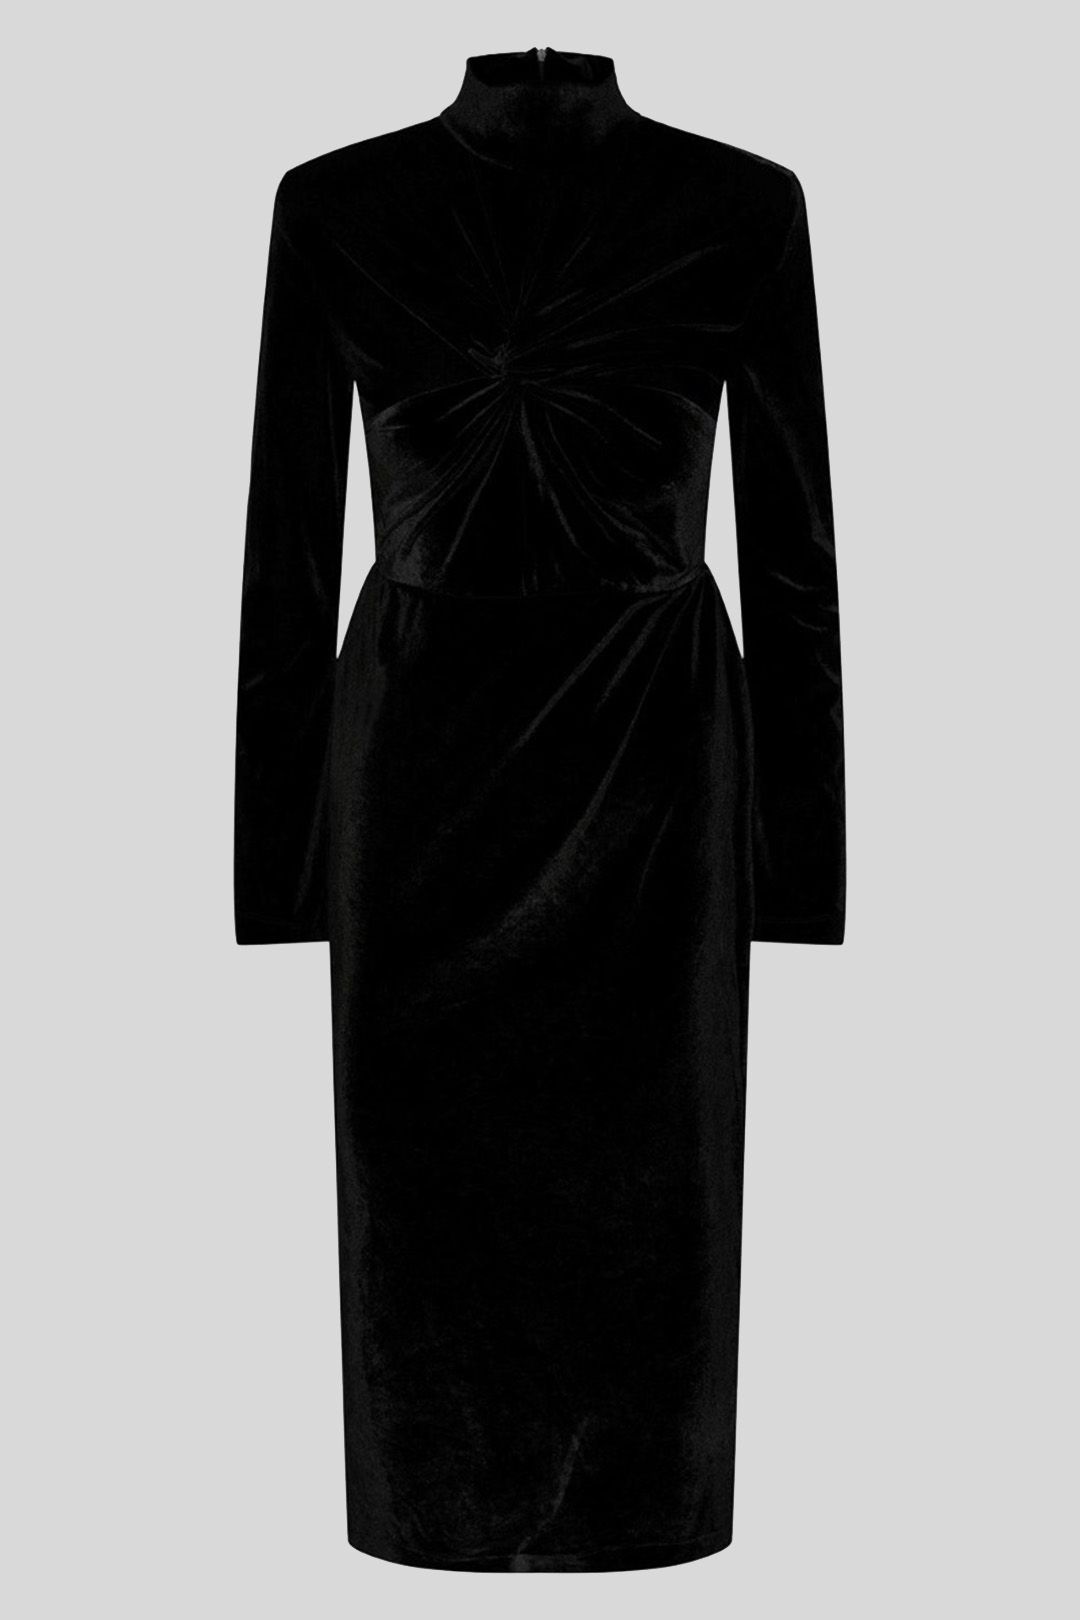 Yasnovella High Neck Dress in Black